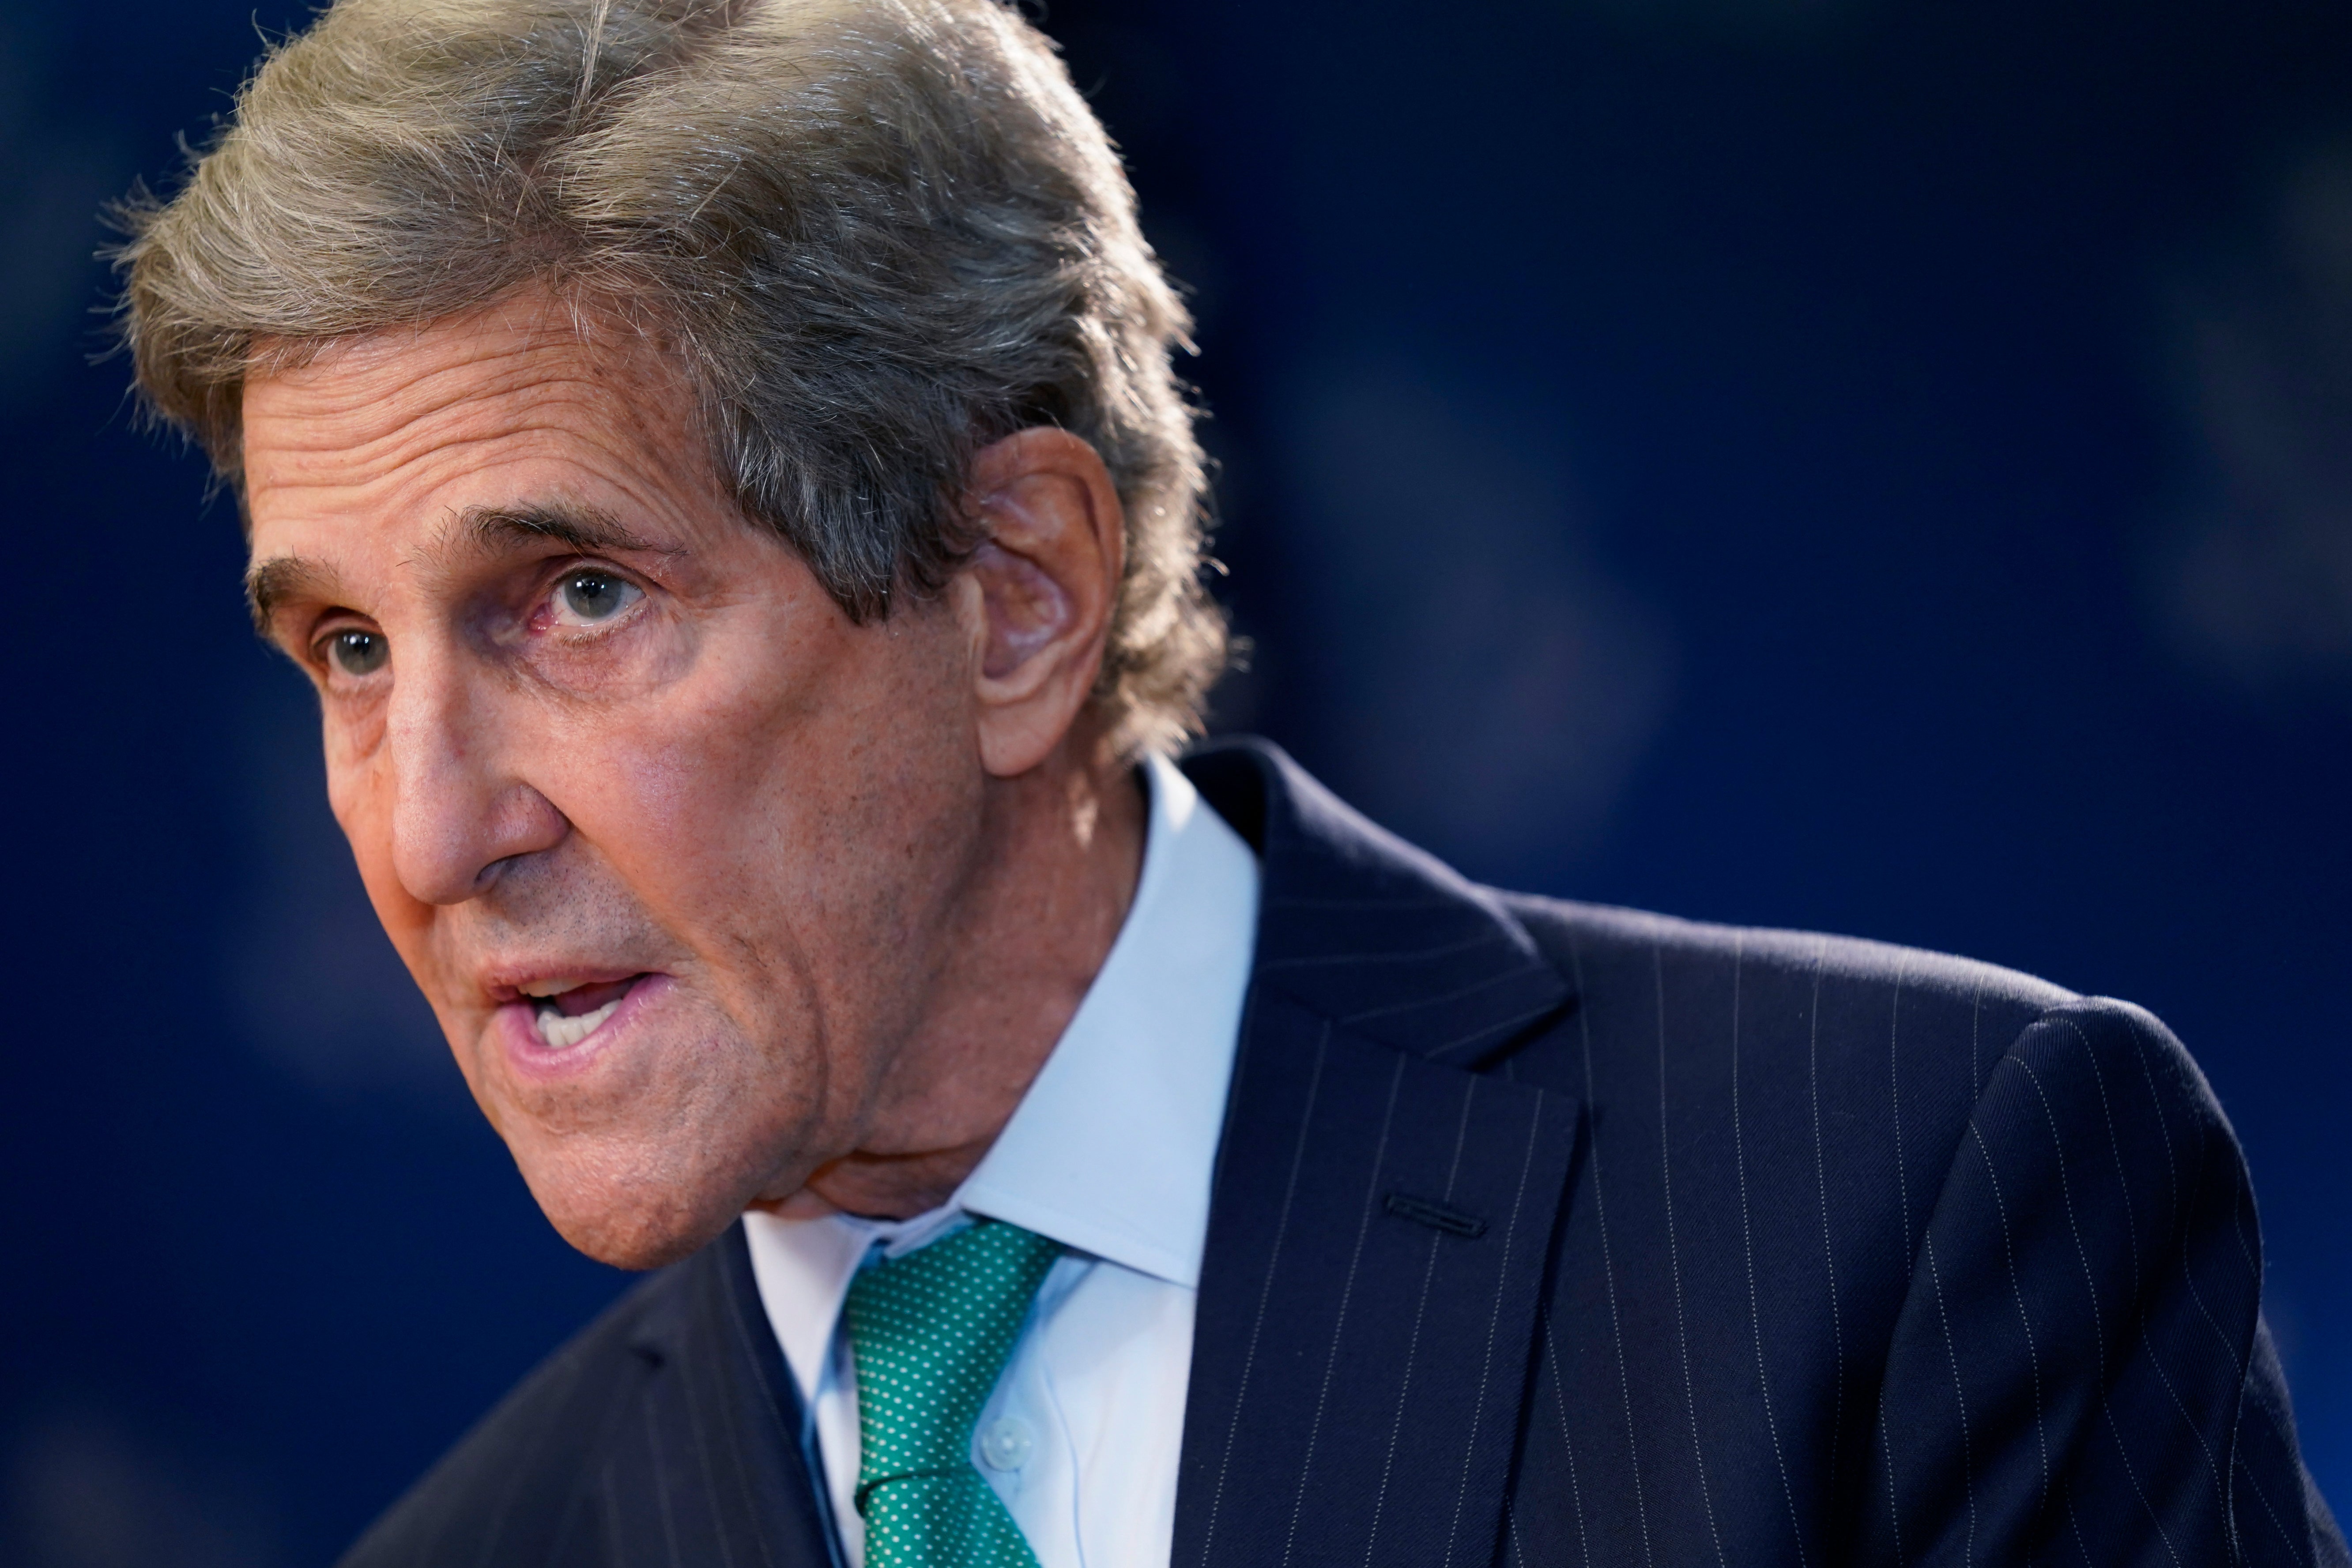 John Kerry will visit Riyadh on 24 and 25 October